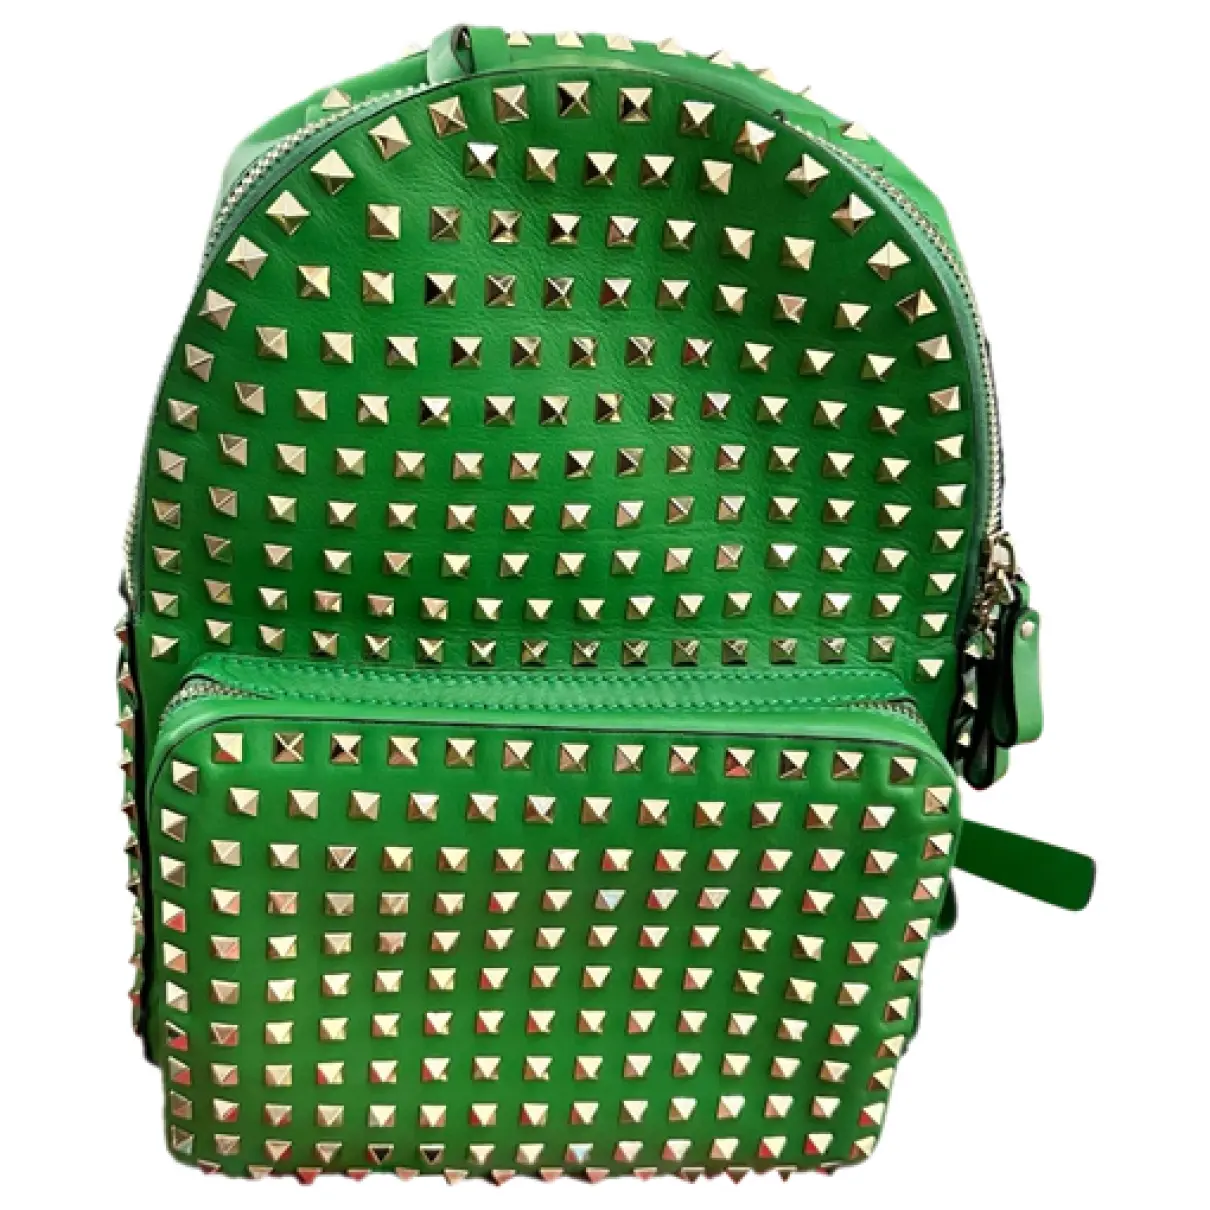 Rockstud spike leather backpack